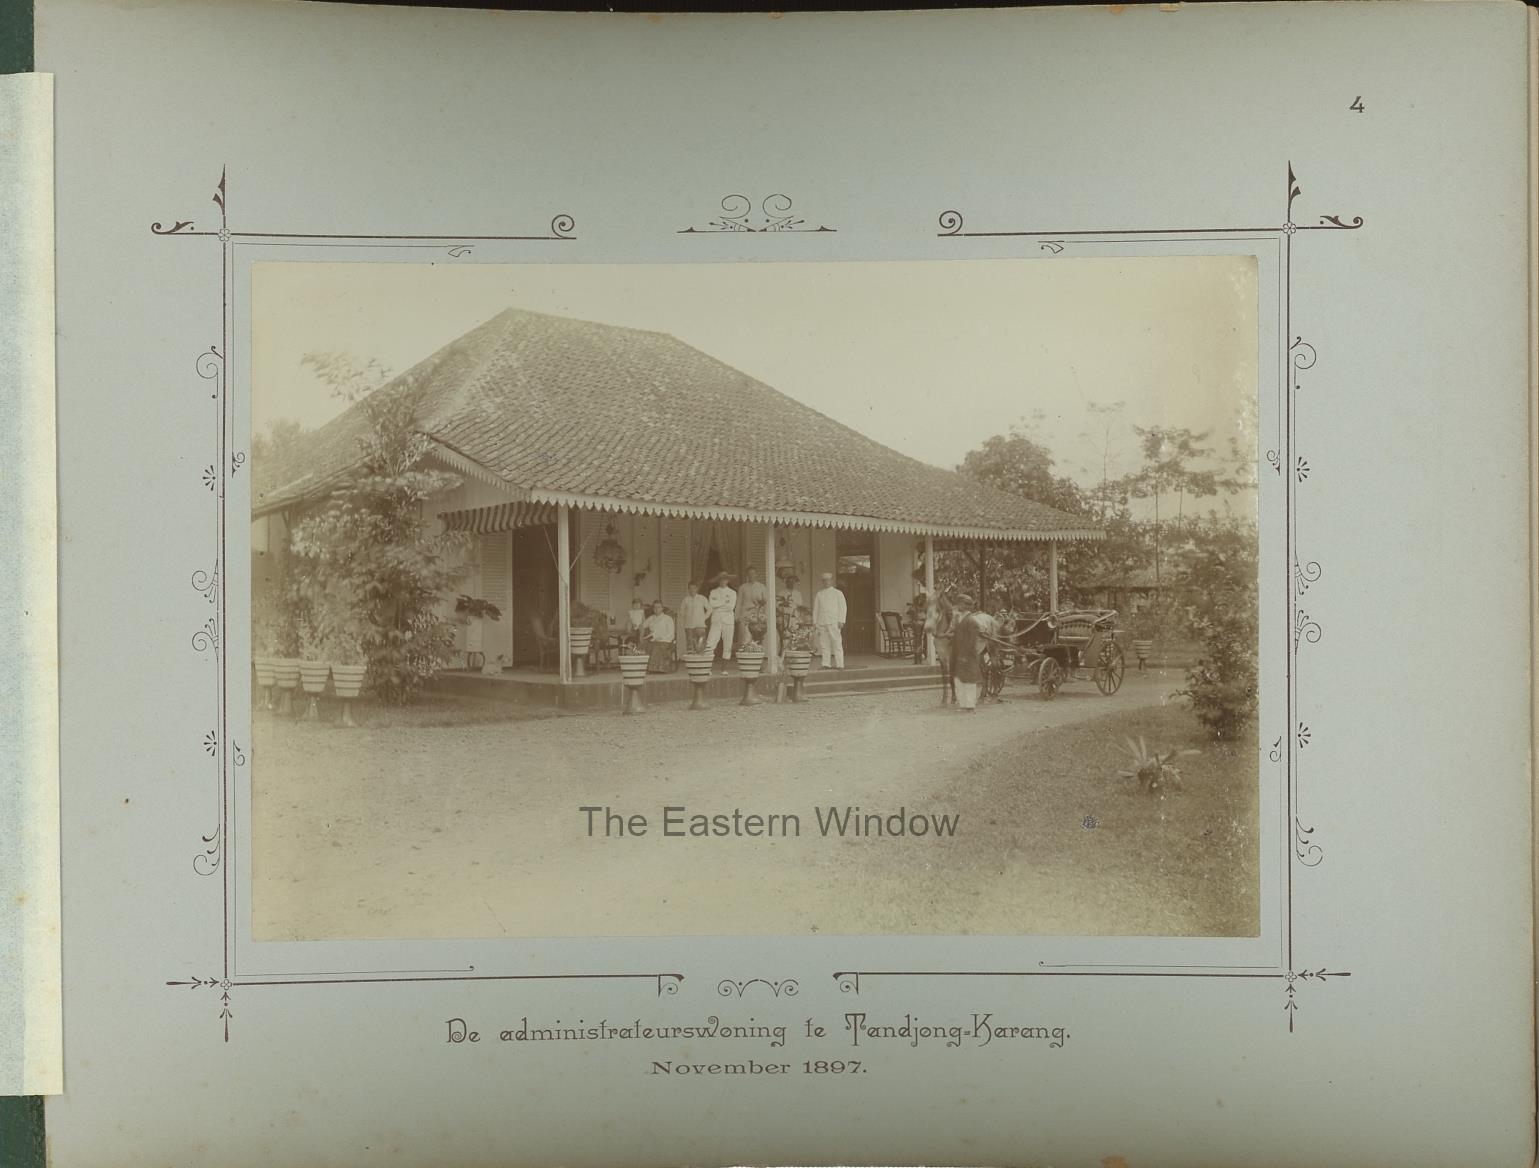 Administrateurswoning - Naar en te Way-Lima en Kedongdong - 68 photo's uit de Kampongs. 1898. S. Muller Hzn (1852-1915). Rotterdam